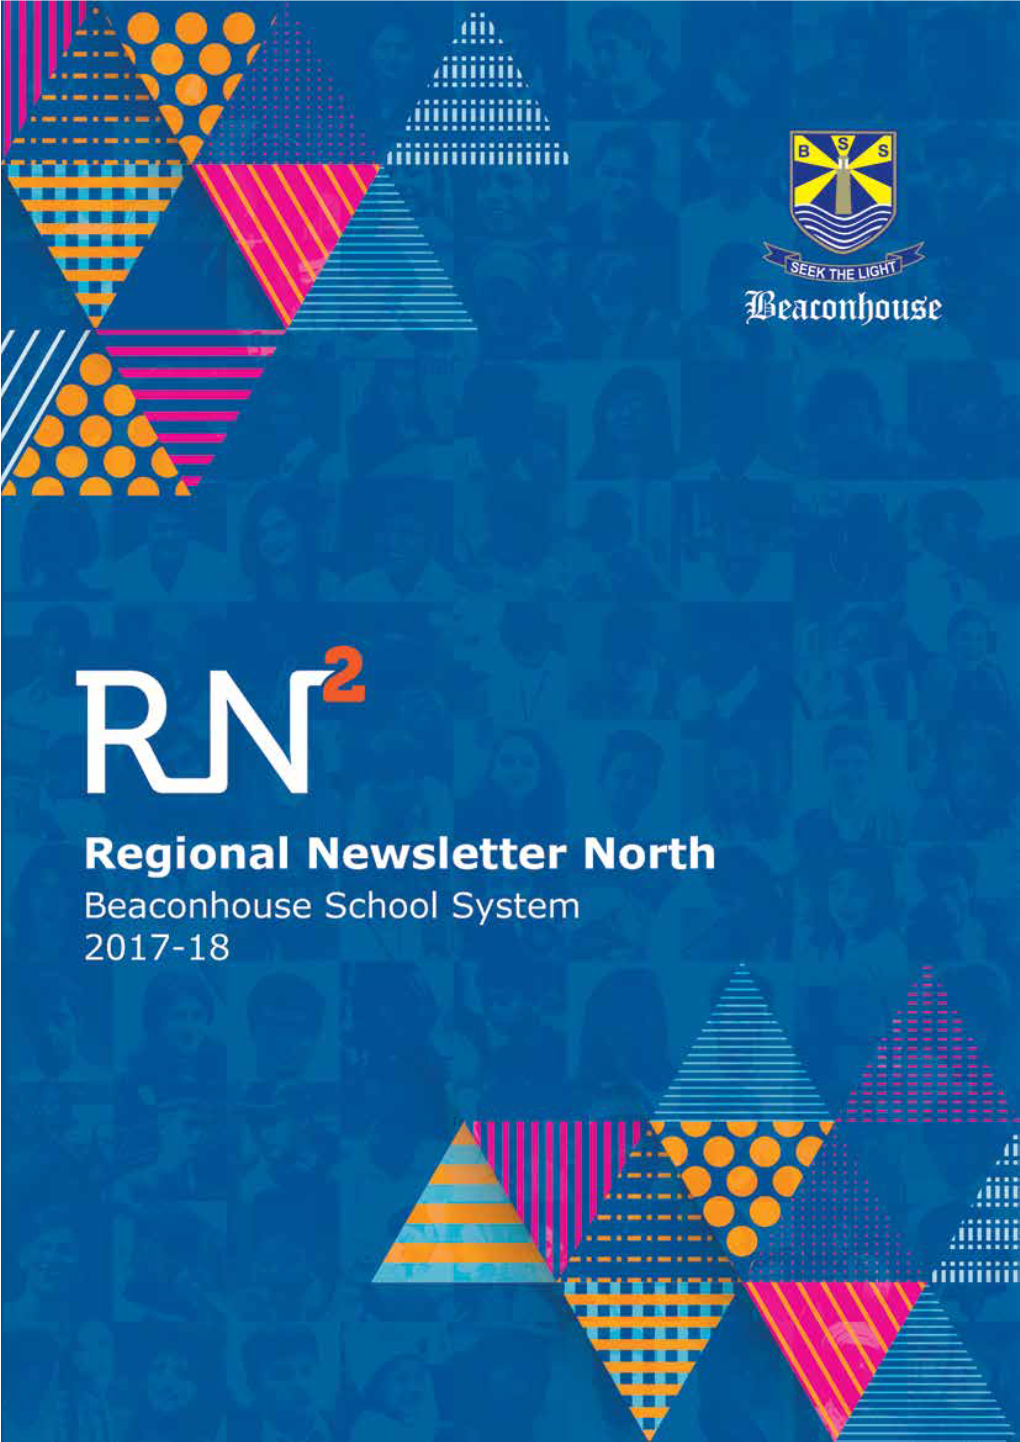 1 Beaconhouse Regional Newsletter North